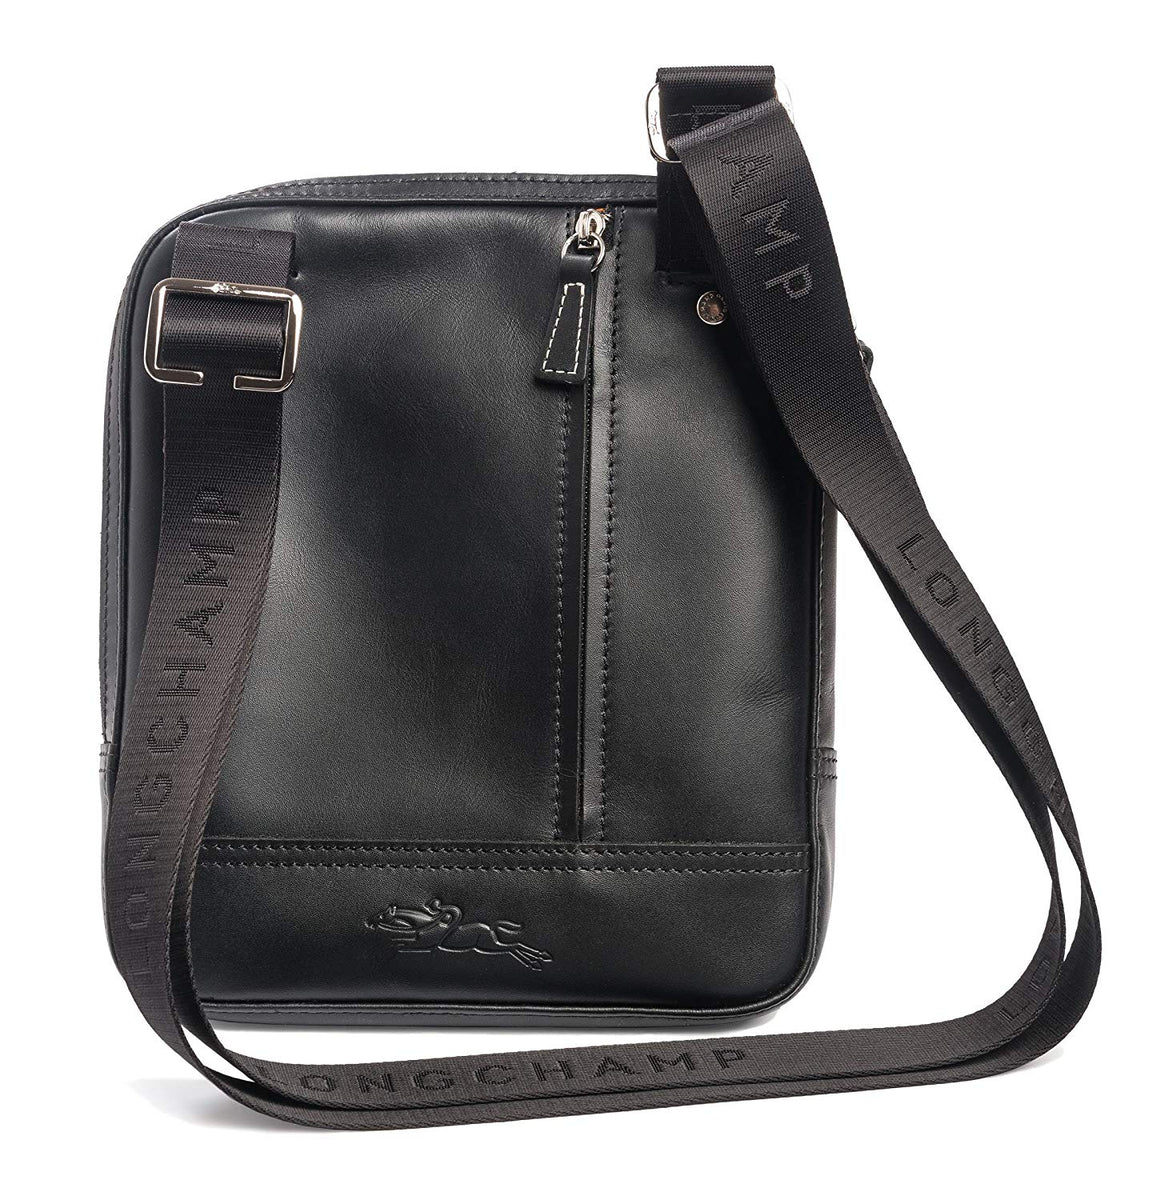 Longchamp, Bags, Longchamp Paris Black Leather Crossbody Bag